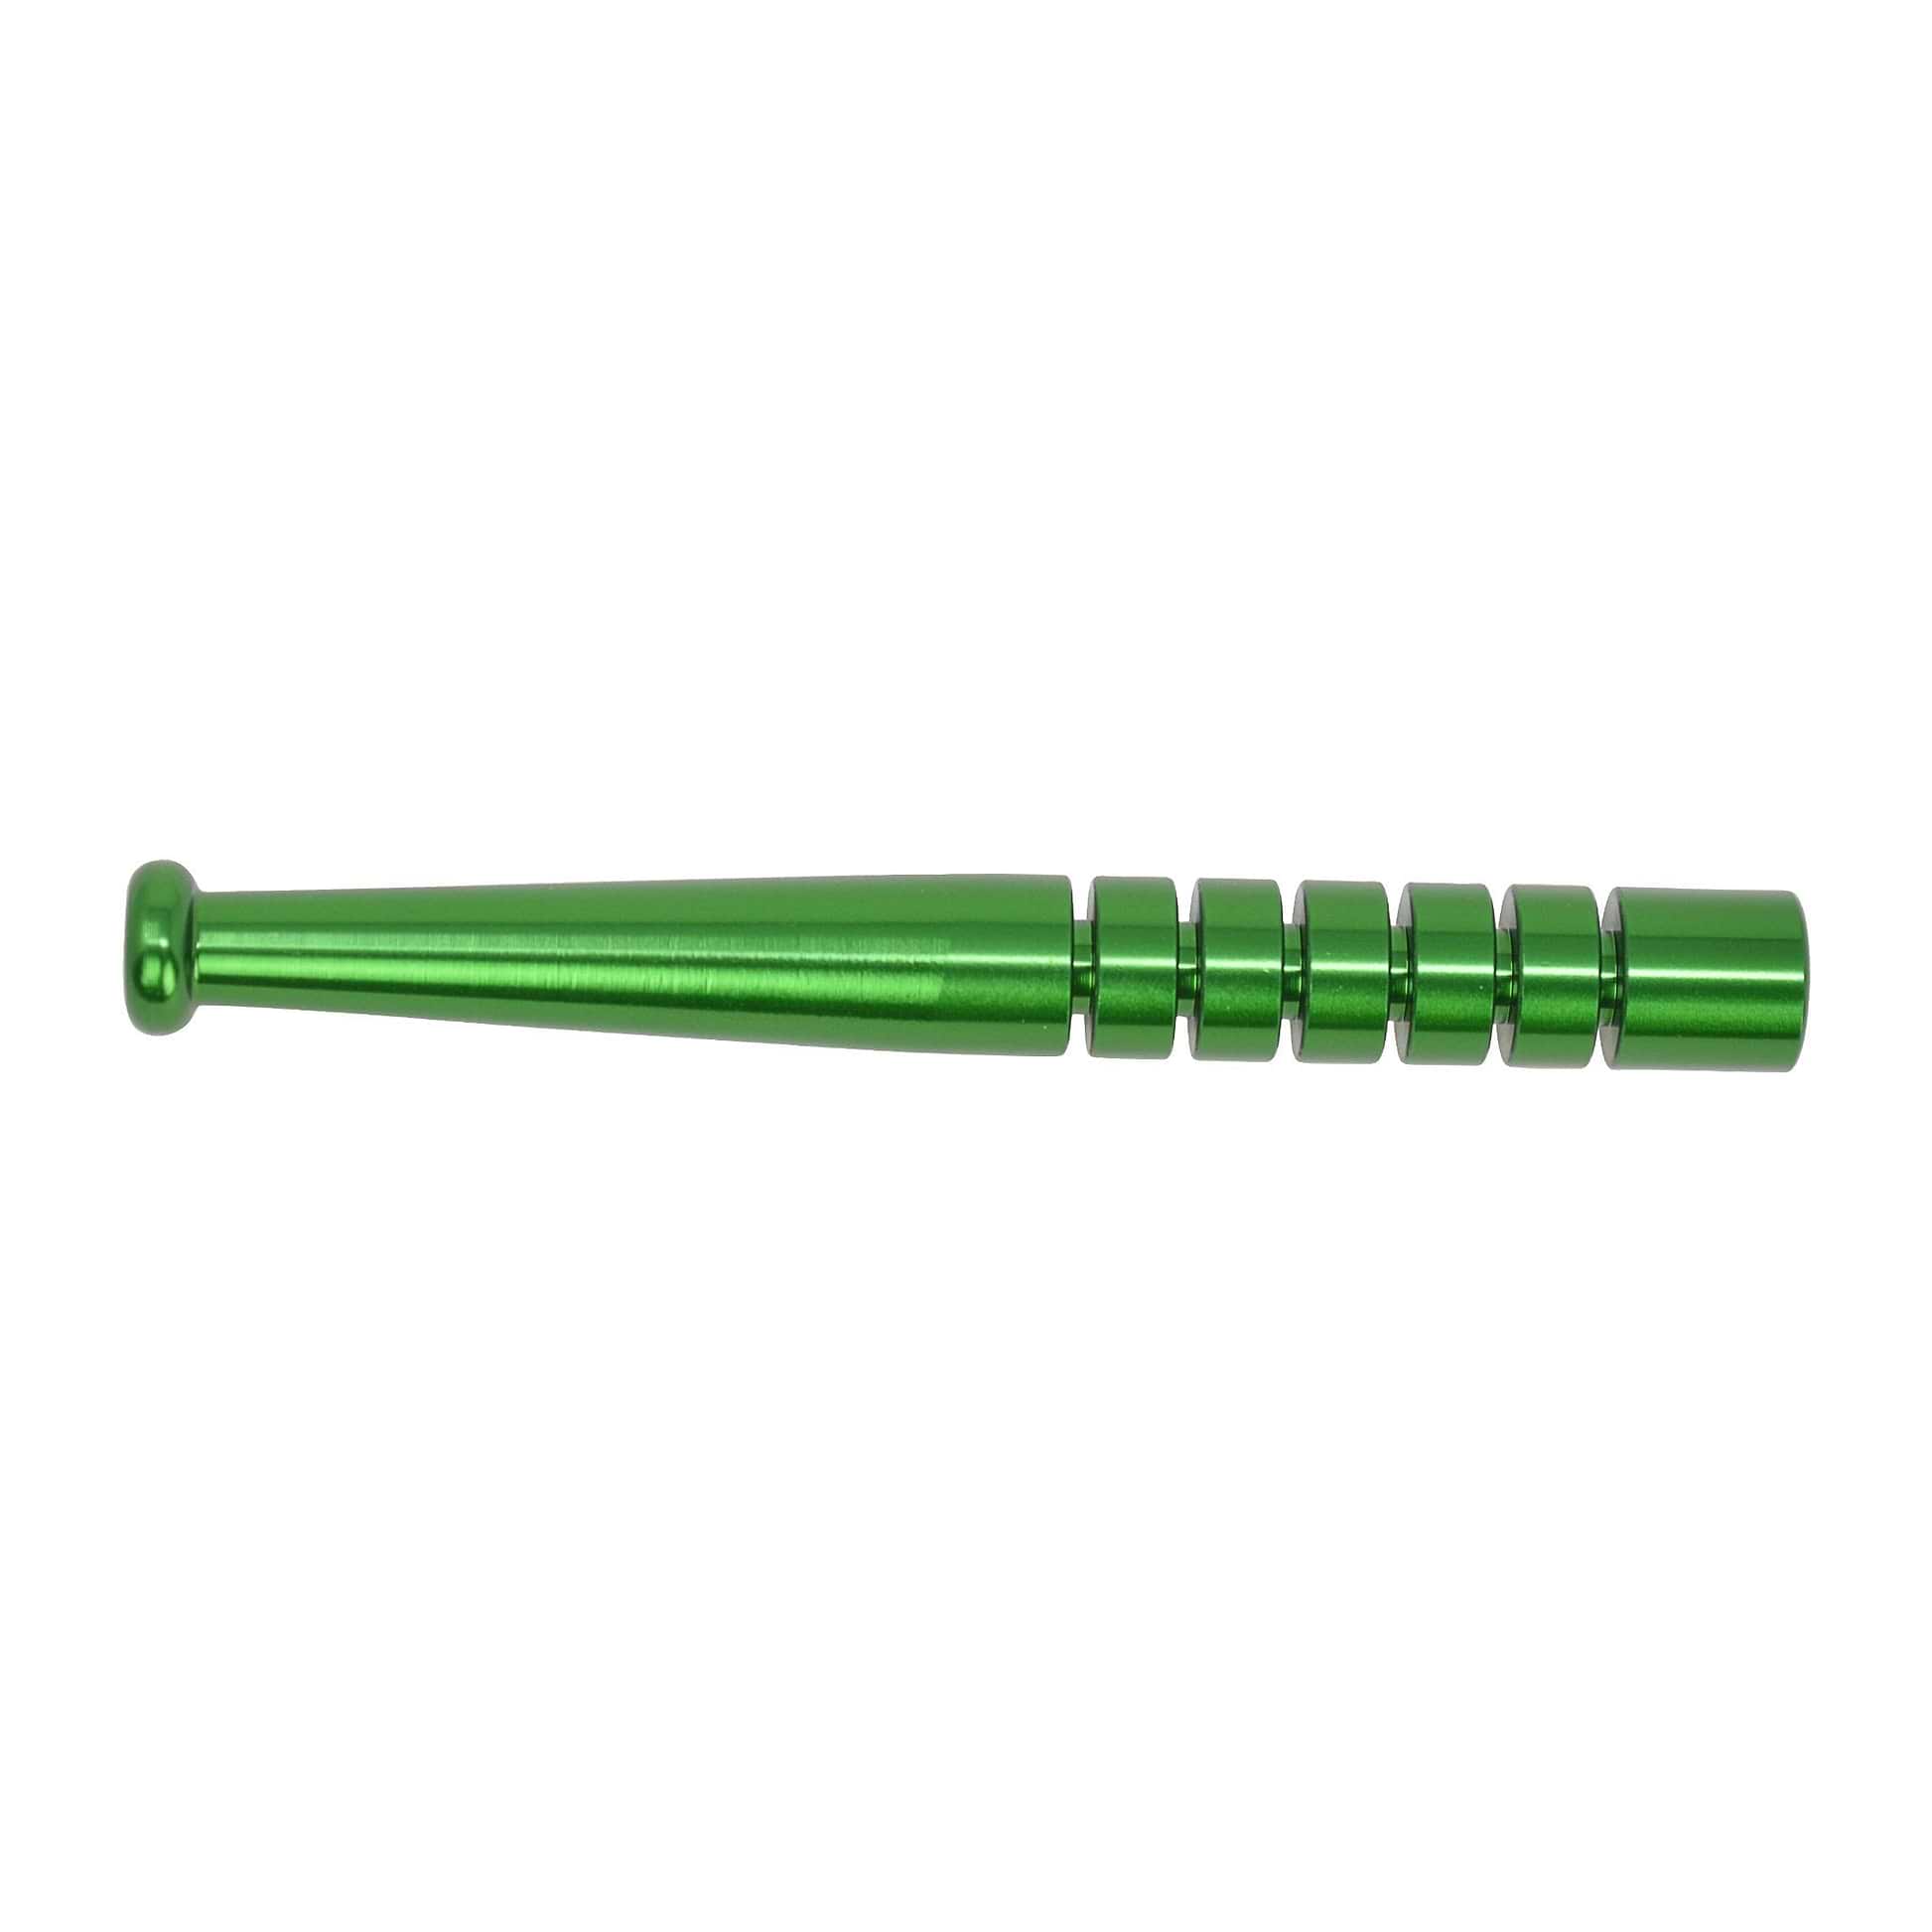 Green metal oney little pipe one hitter smoking device with baseball bat design textured ridges